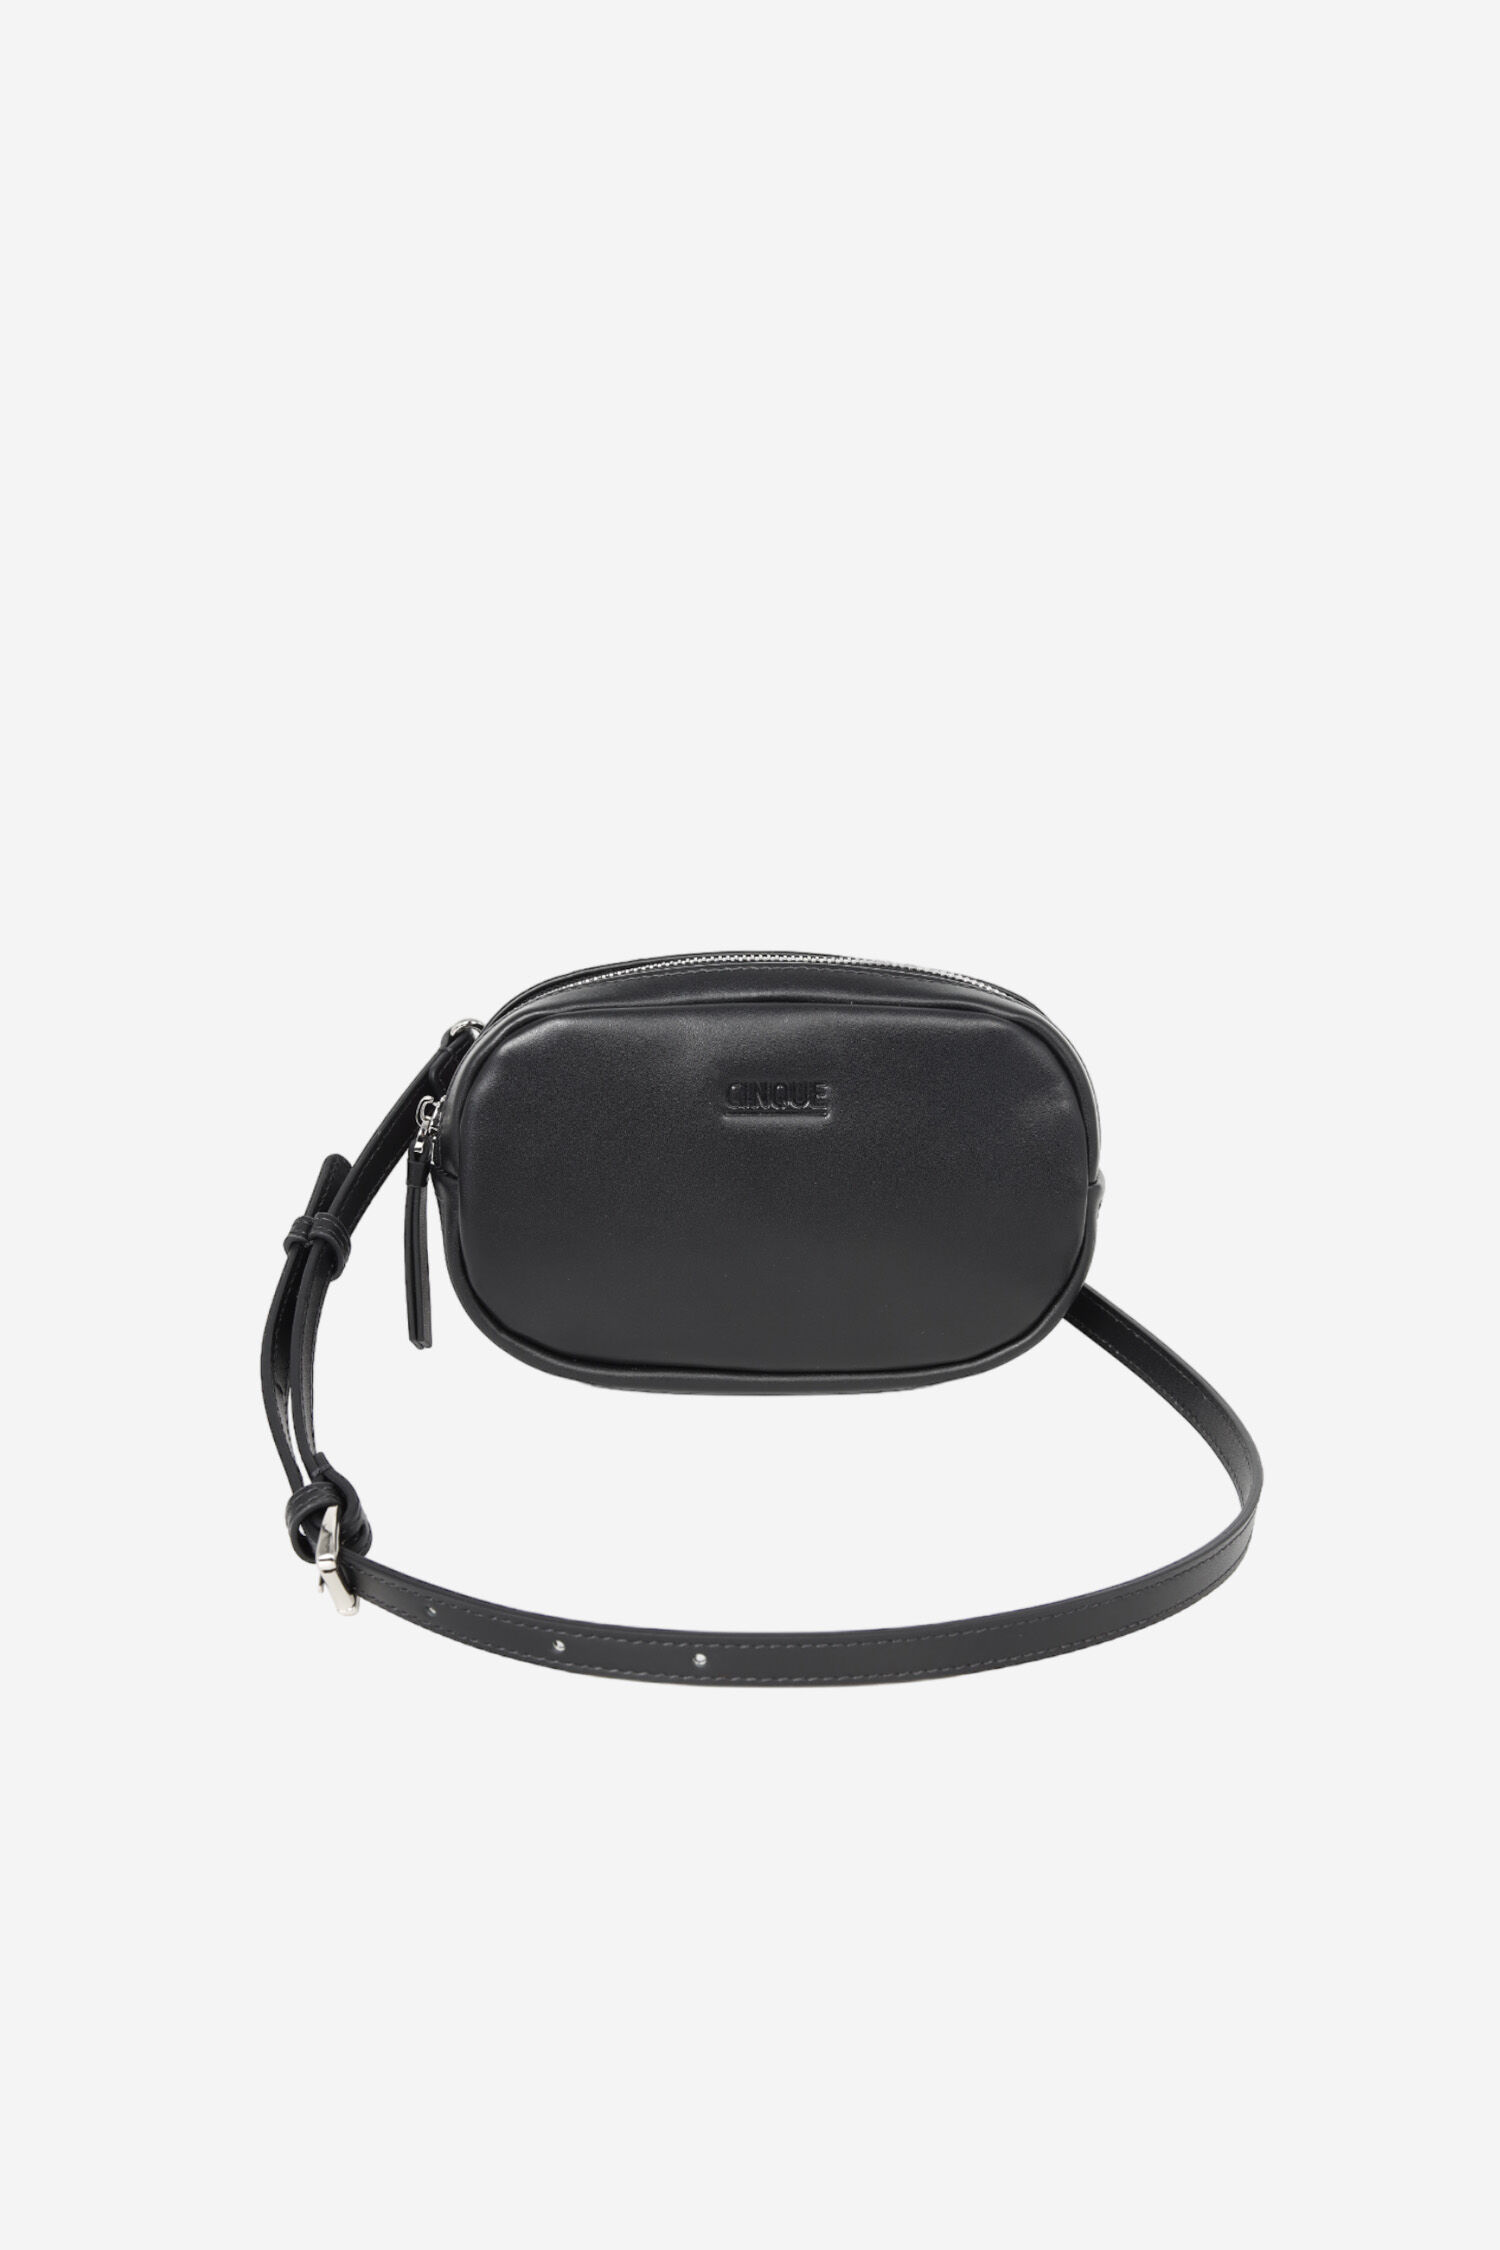 Kipling Reth, Women'S Cross-Body Bag, Schwarz - Black Scarlet Emb,  27X17.5X0.1 cm - B X H T : Amazon.in: Shoes & Handbags